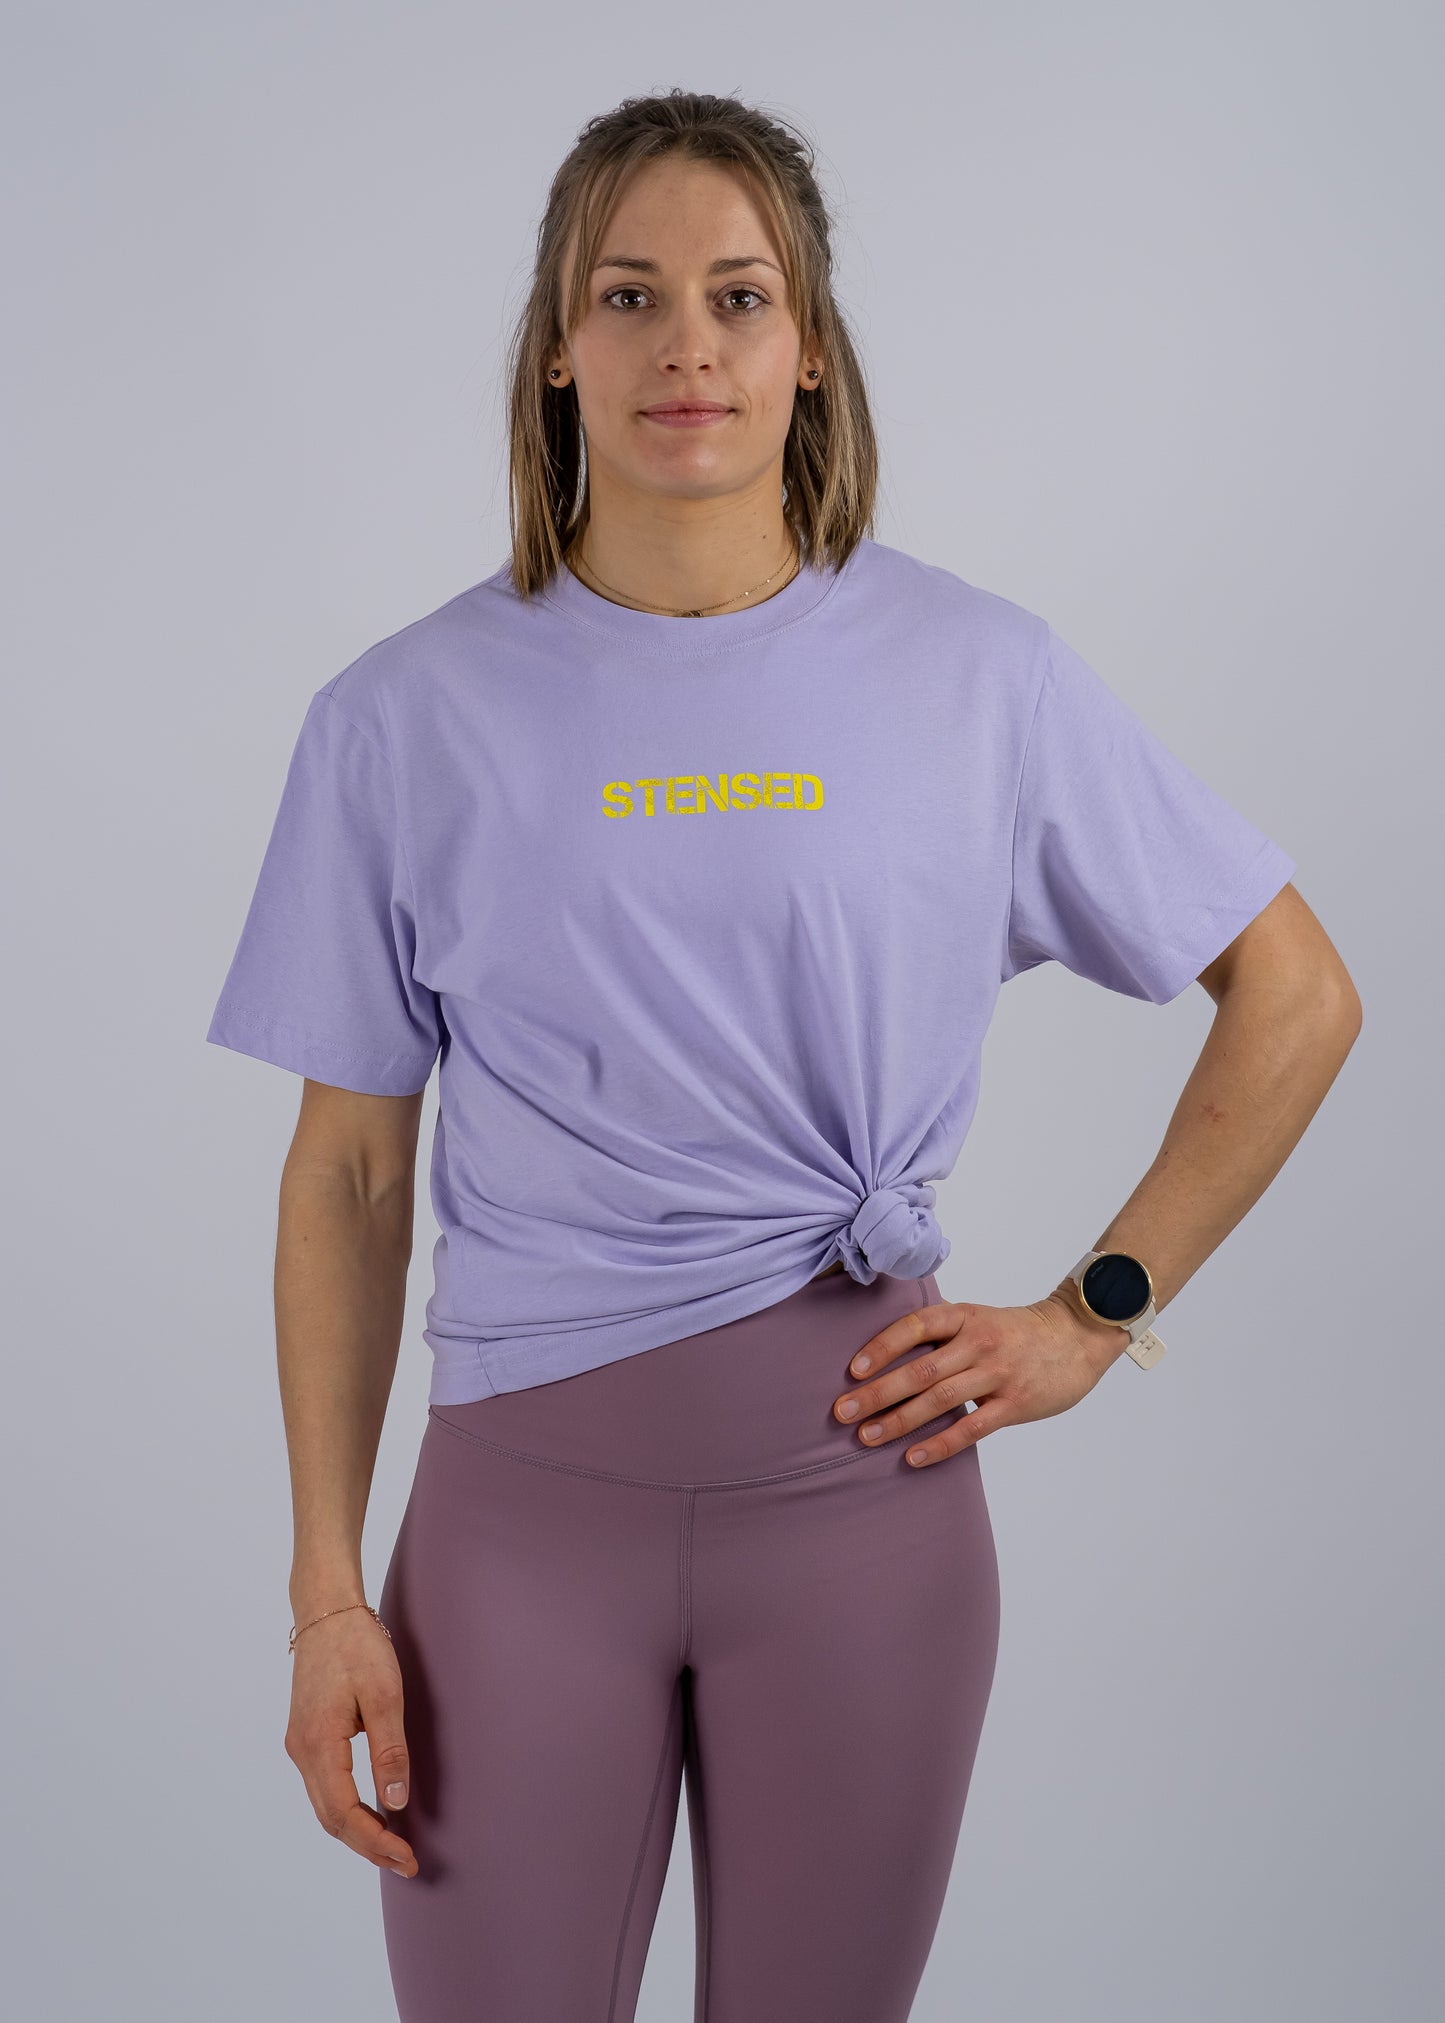 T-shirt STENSED Original Purple Femme